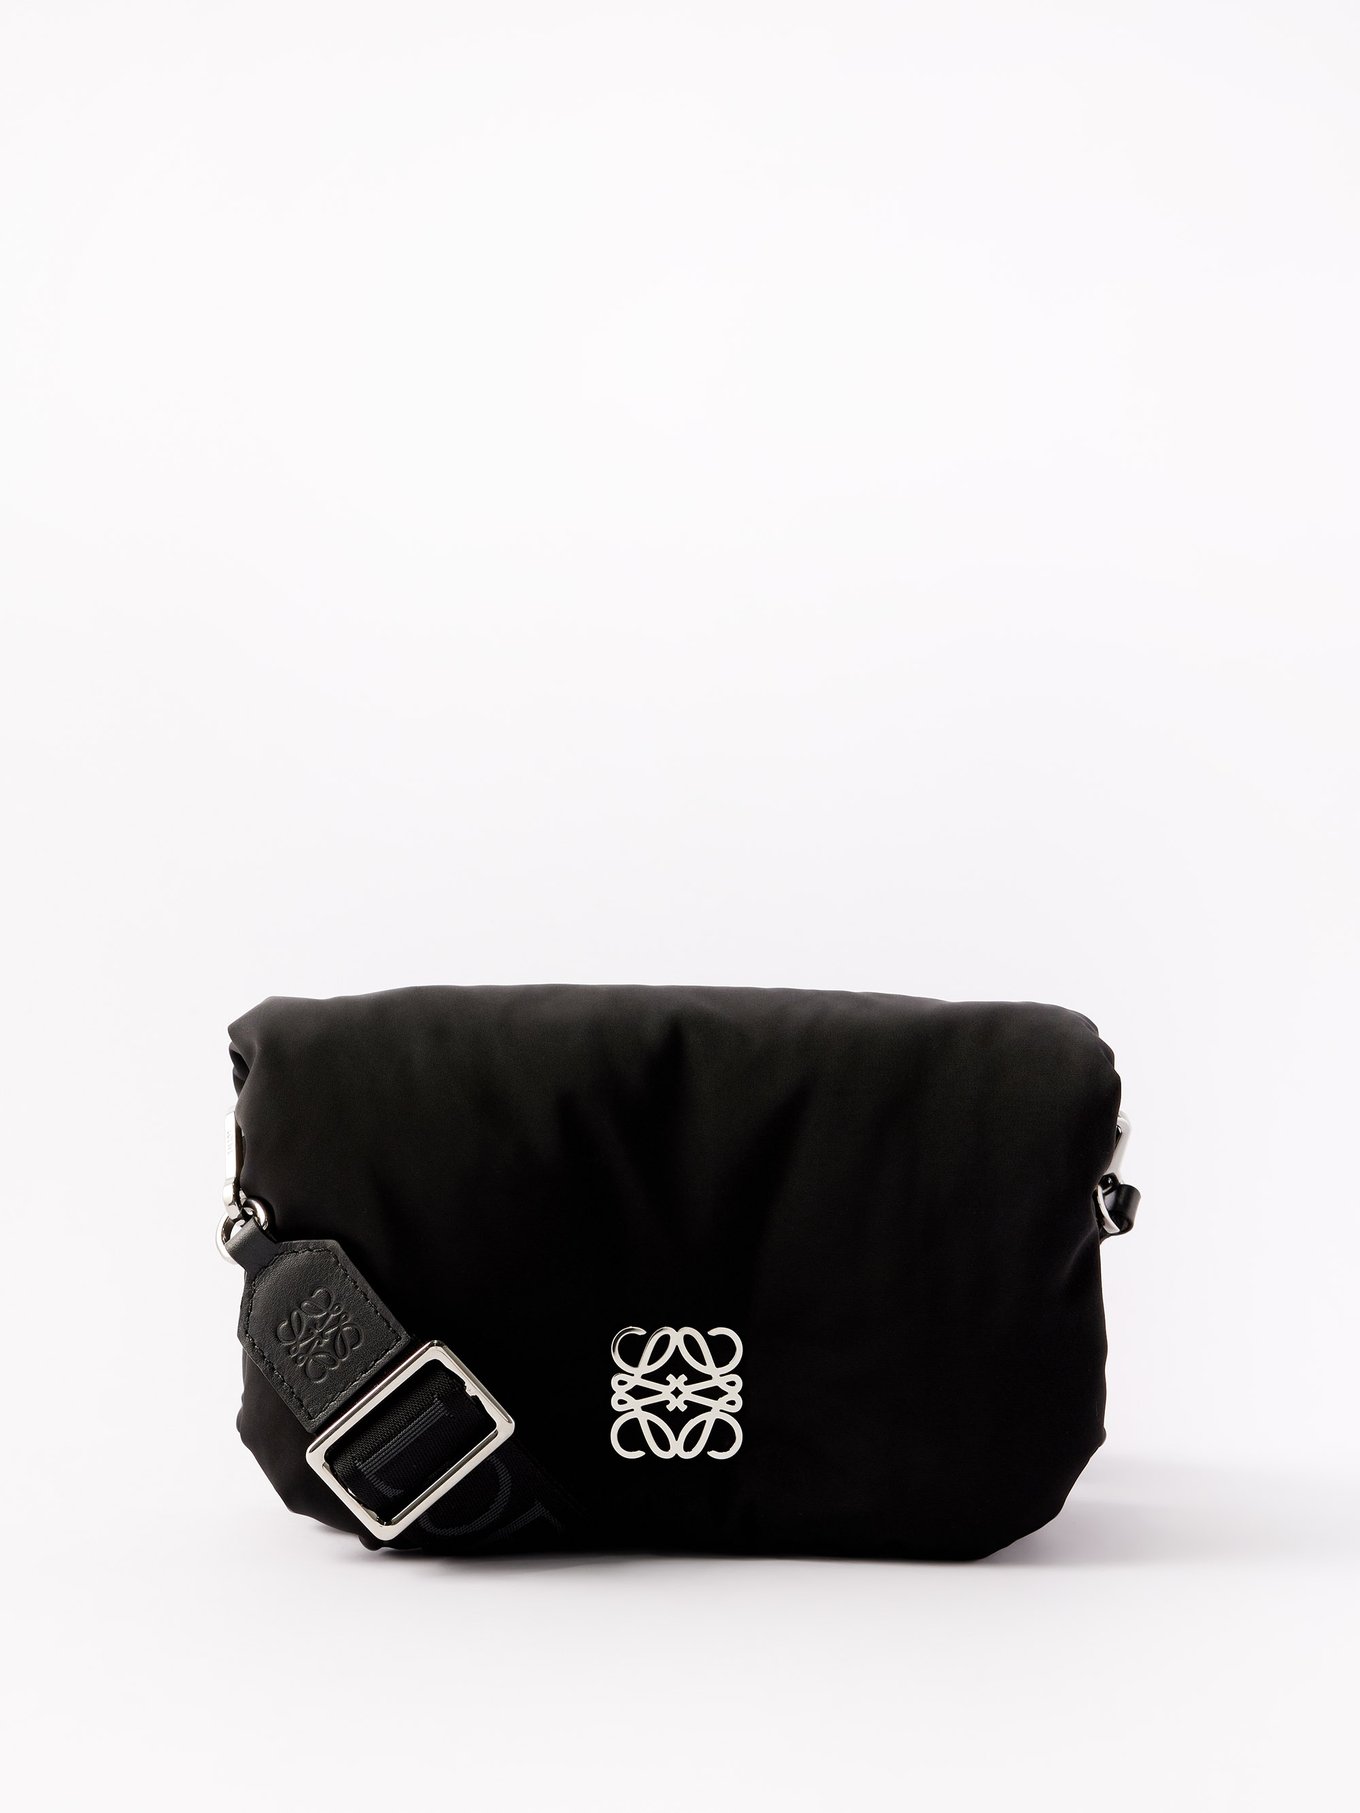 Goya Puffer Anagram Medium Messenger Bag in Black - Loewe